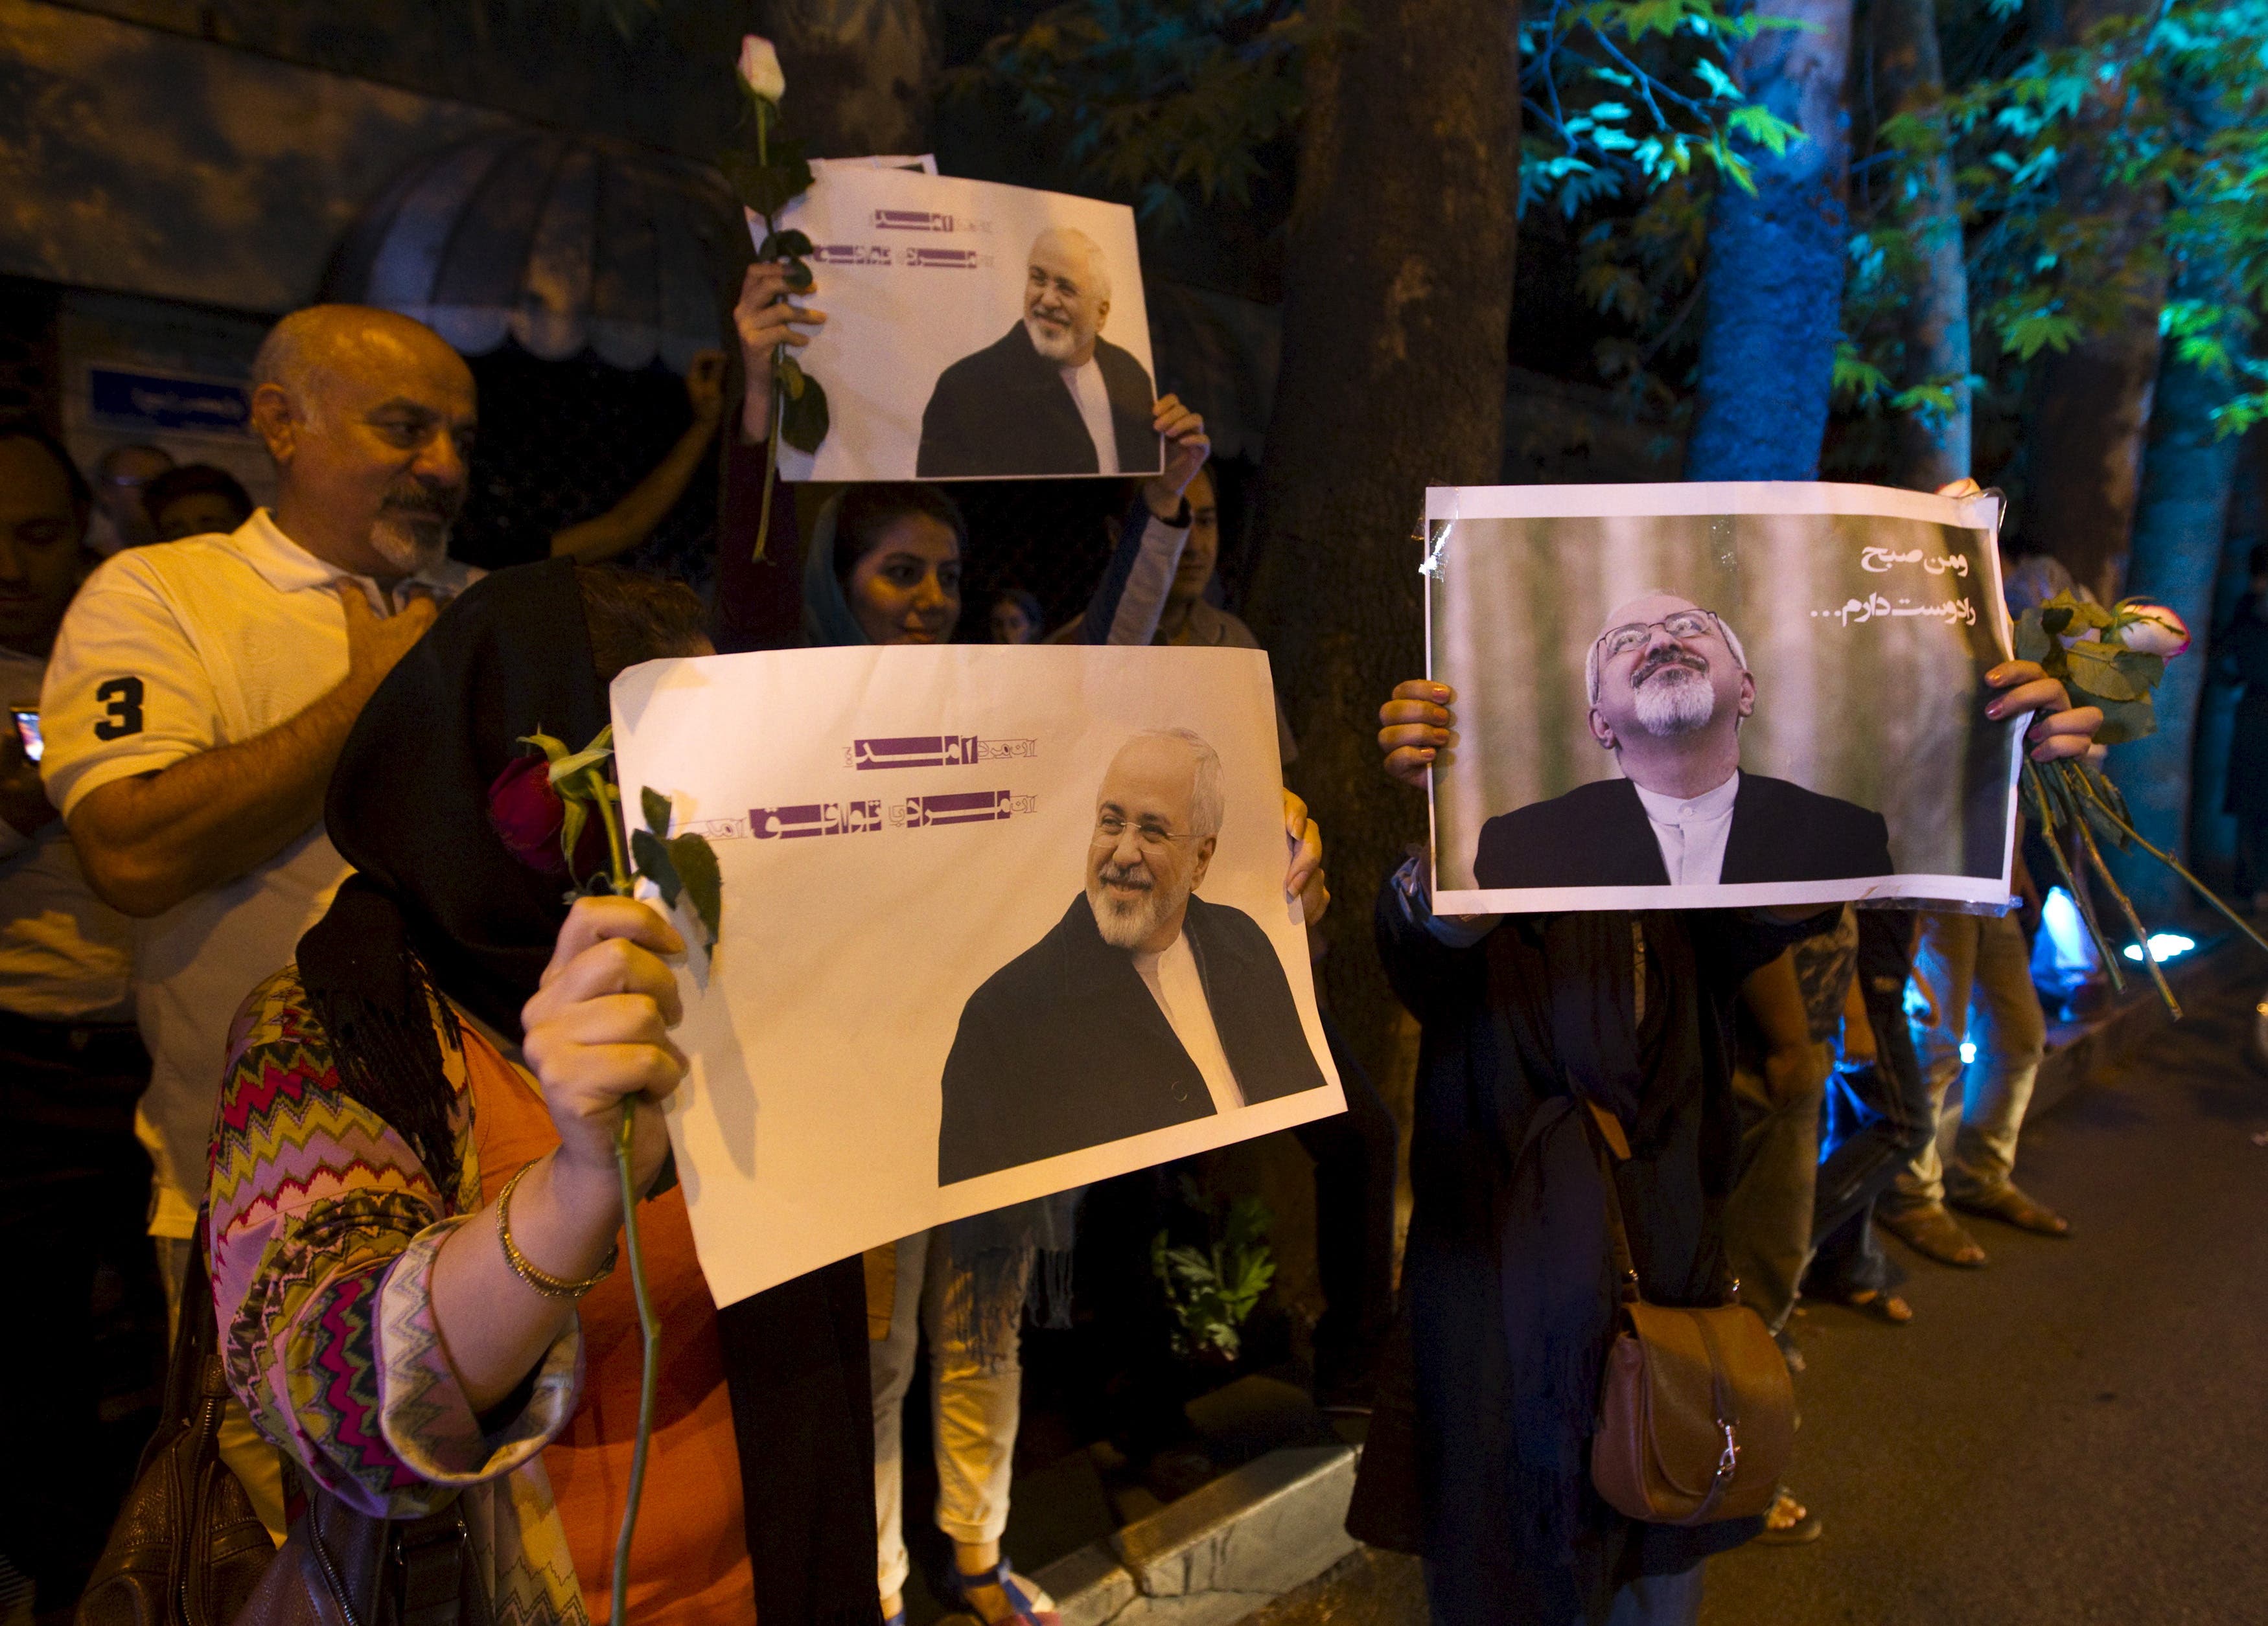 Iran celebrates nuclear deal